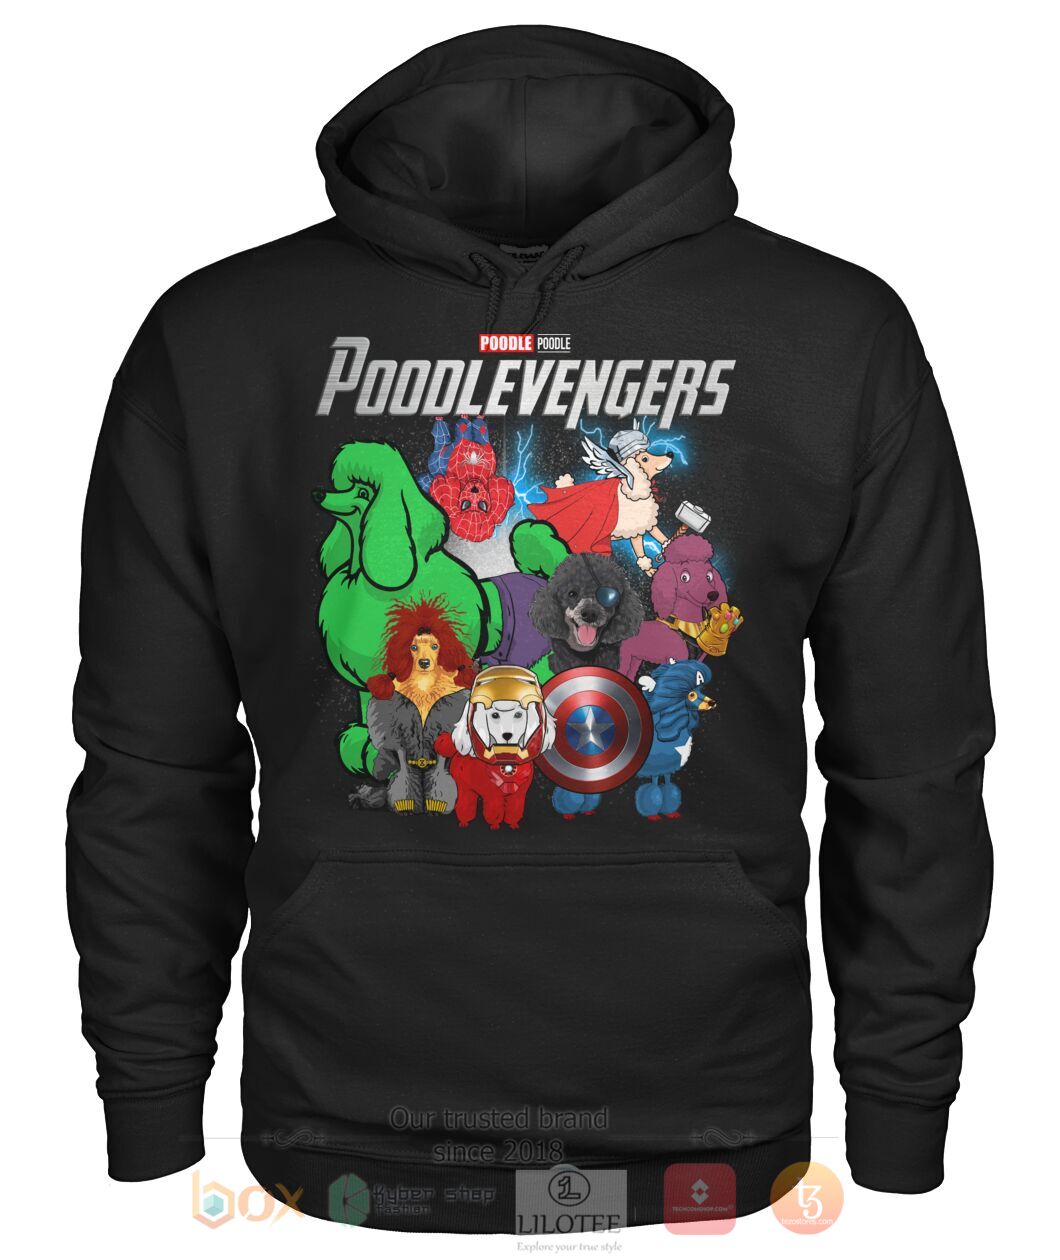 Poodlevengers 3D Hoodie Shirt 1